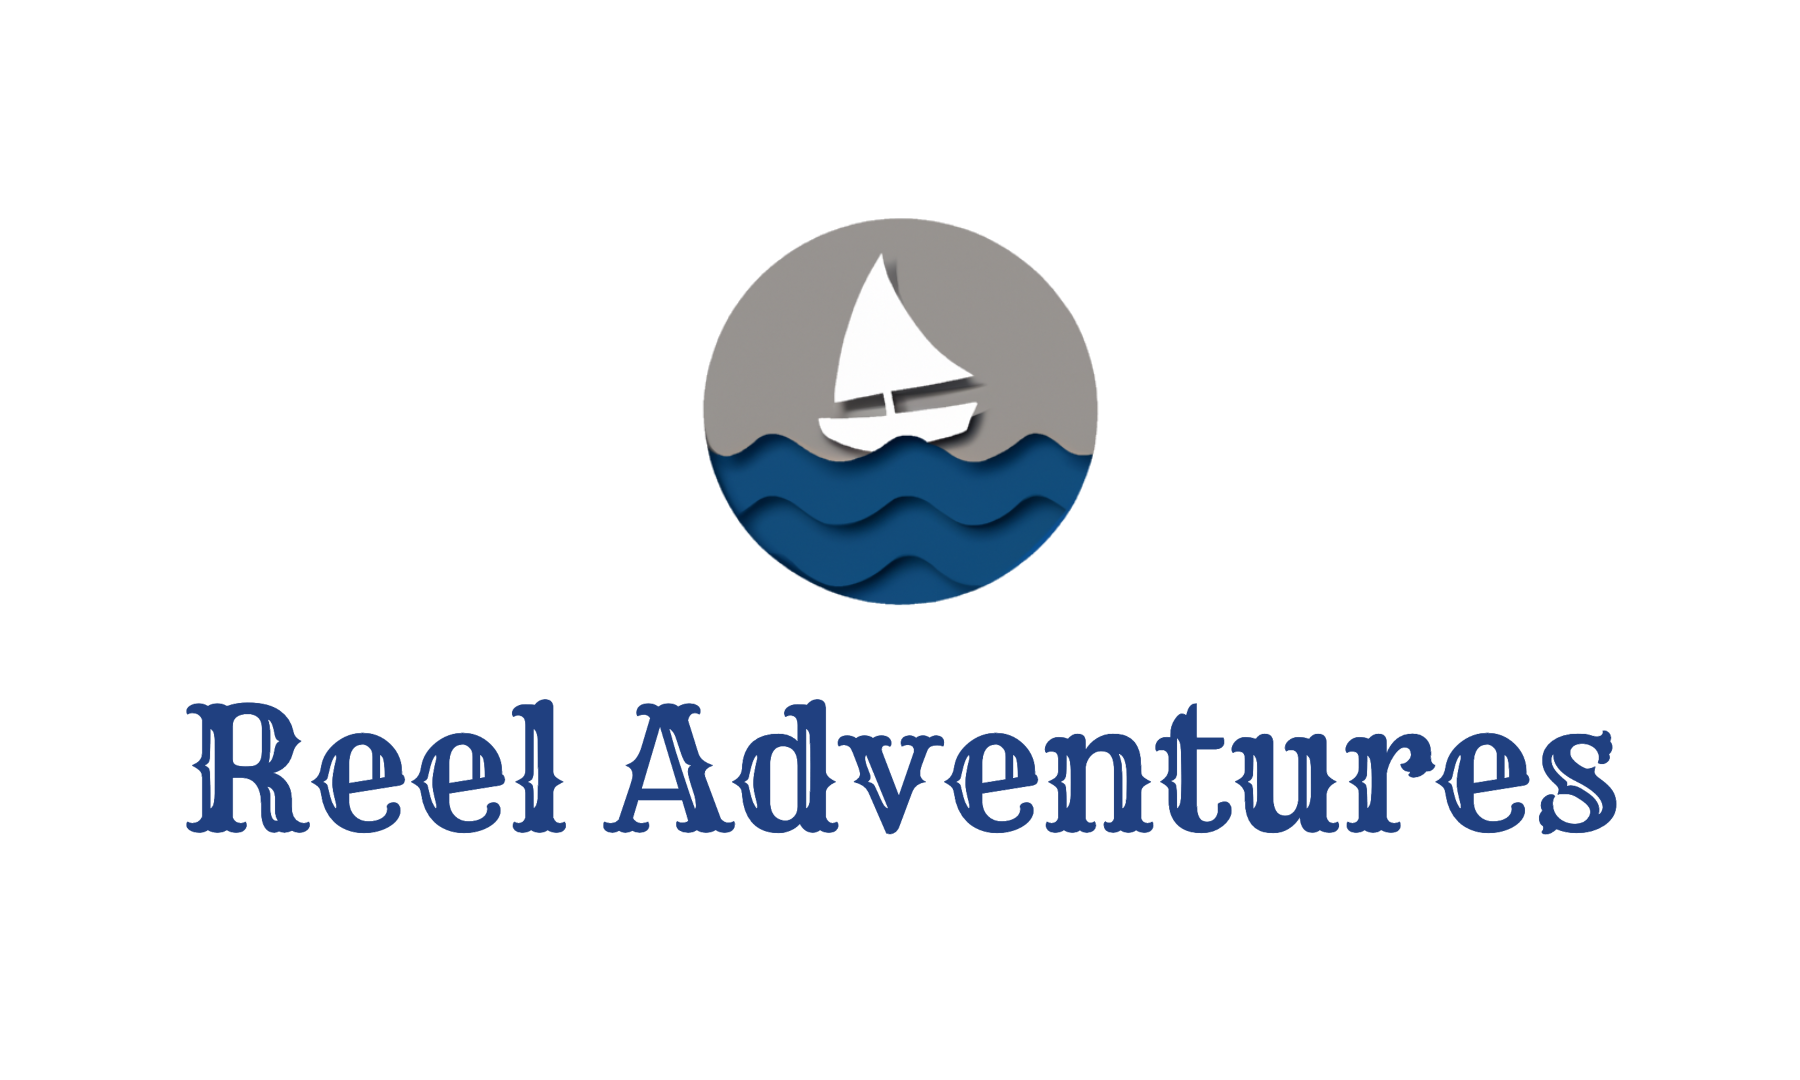 Fishing Logo Maker  Choose from more than 48+ logo templates